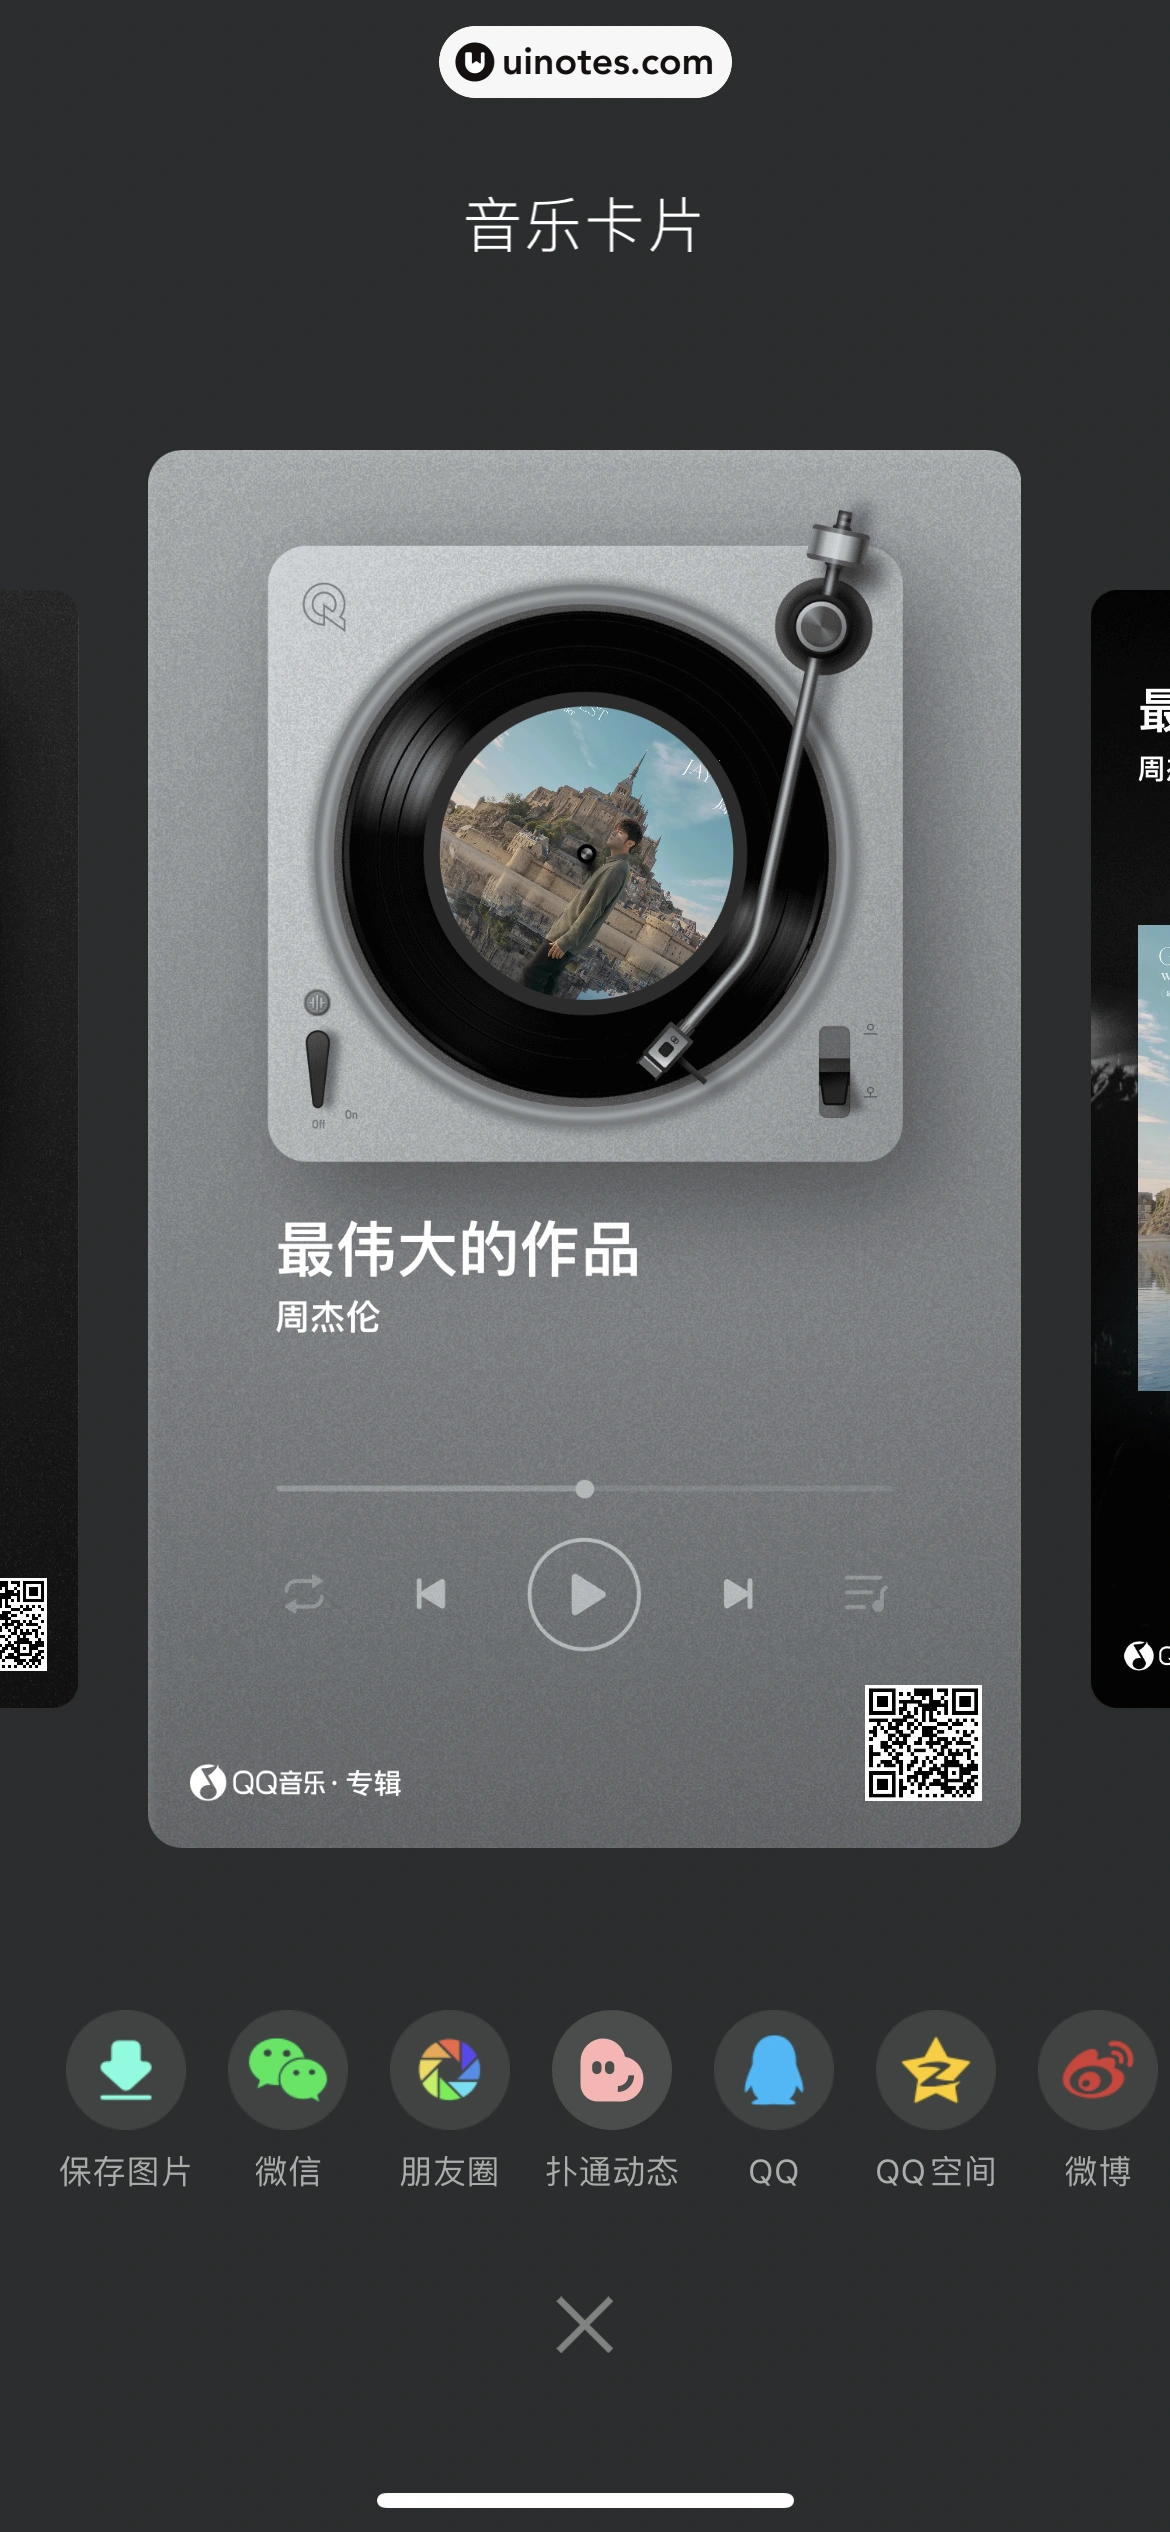 QQ音乐 App 截图 060 - UI Notes